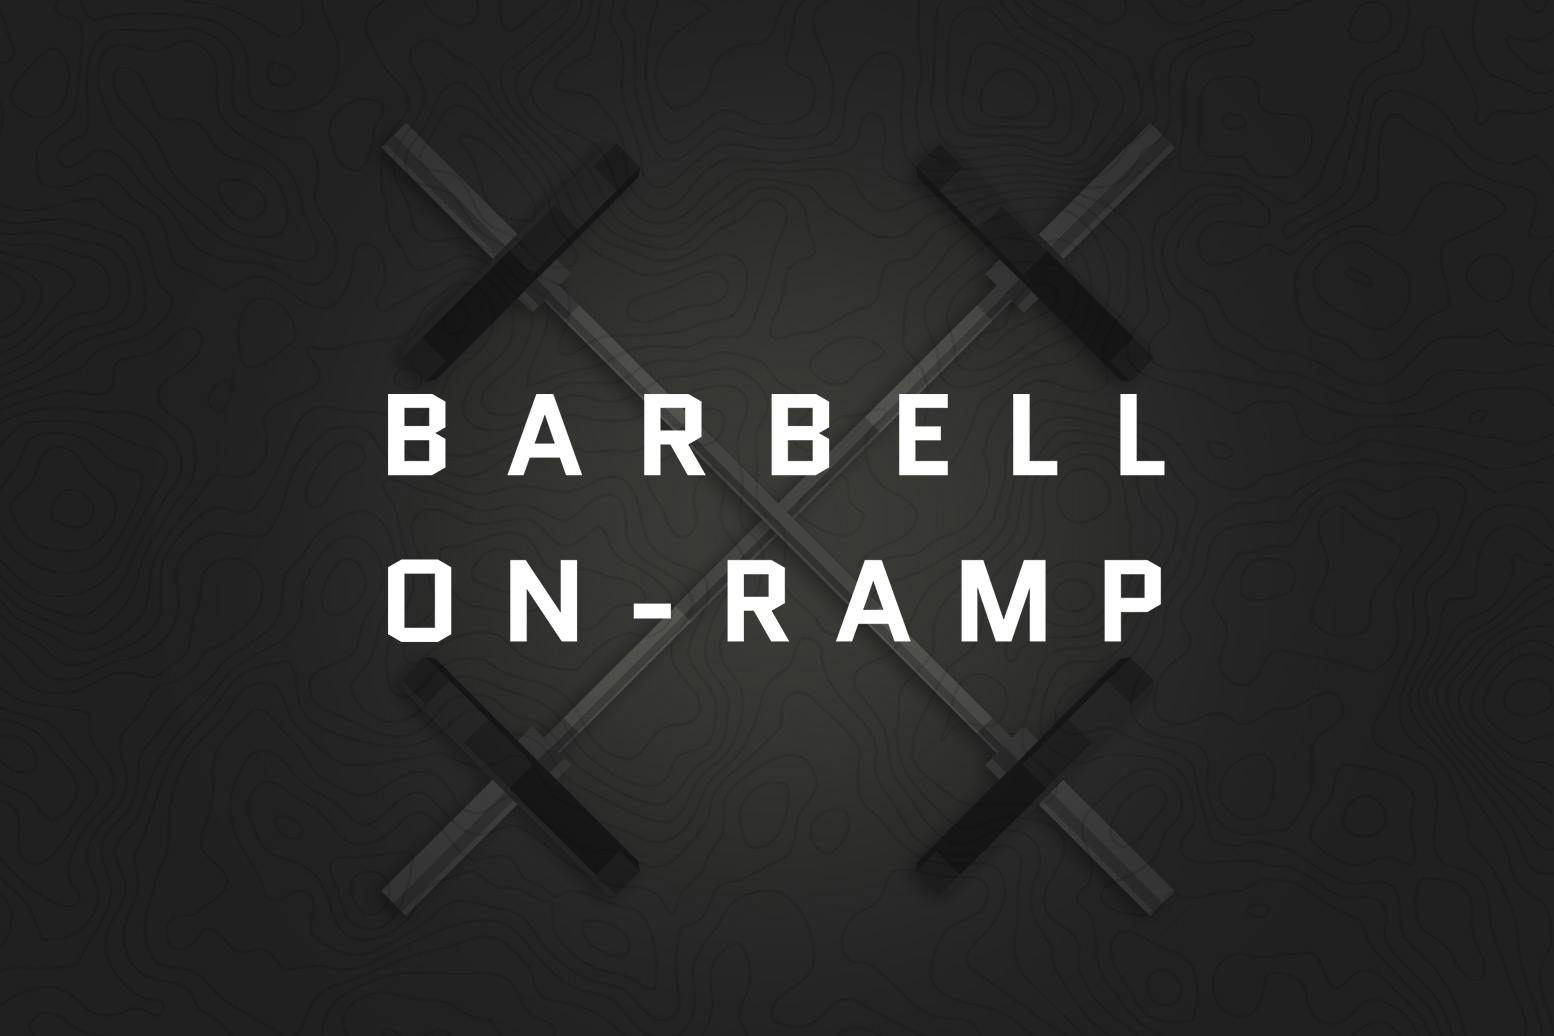 Barbell On-ramp